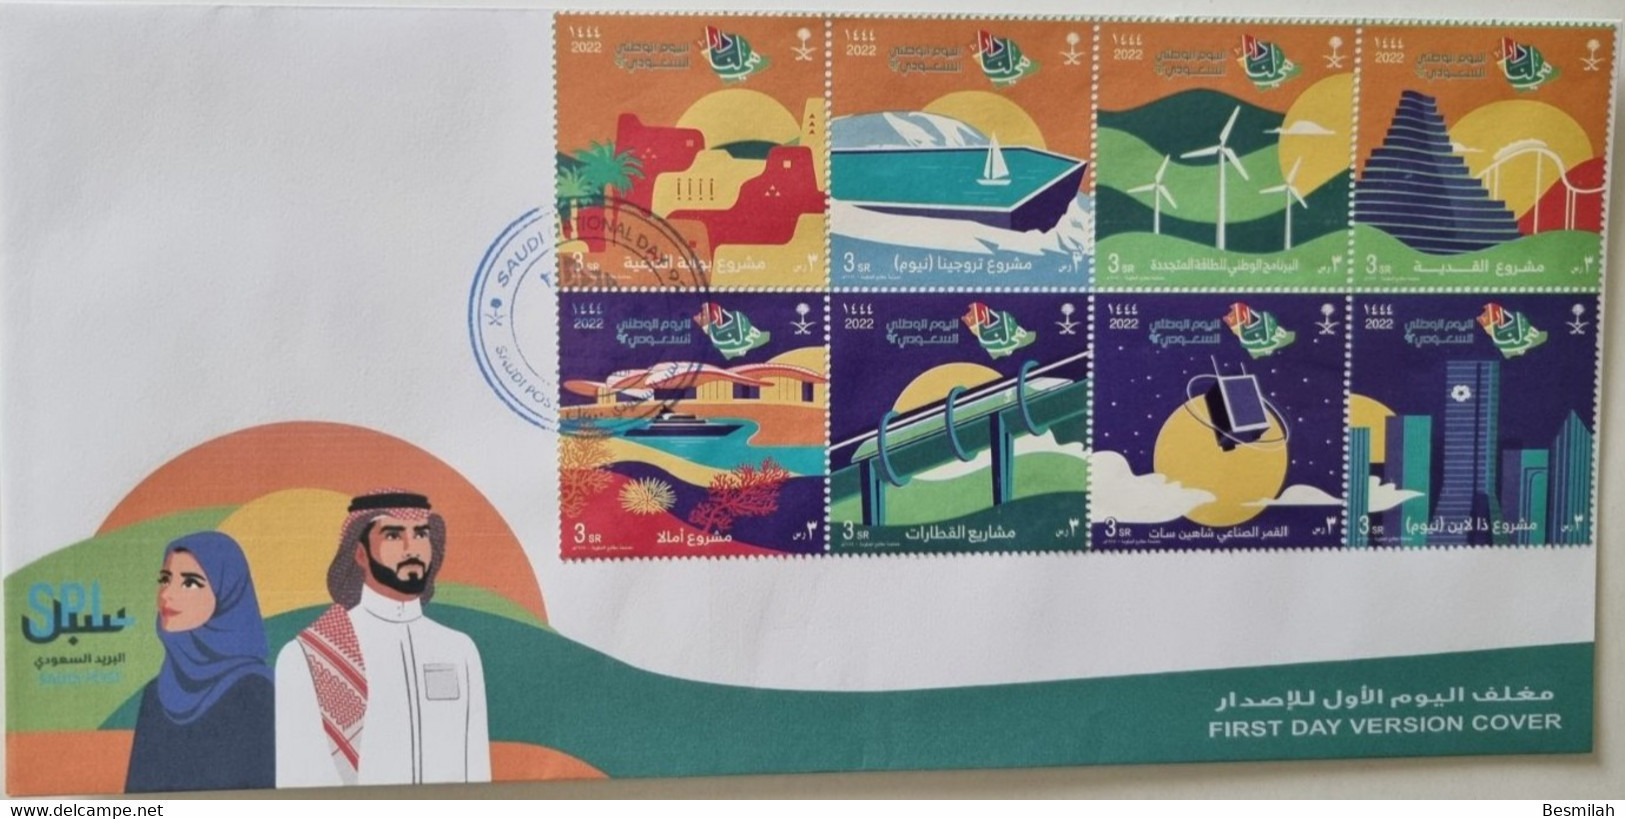 Saudi Arabia Stamp 92 National Day 2022 (1444 Hijry) 16 Pieces Of 3 Riyals + Card + Post Card Plus FDVC For Both - Saudi Arabia